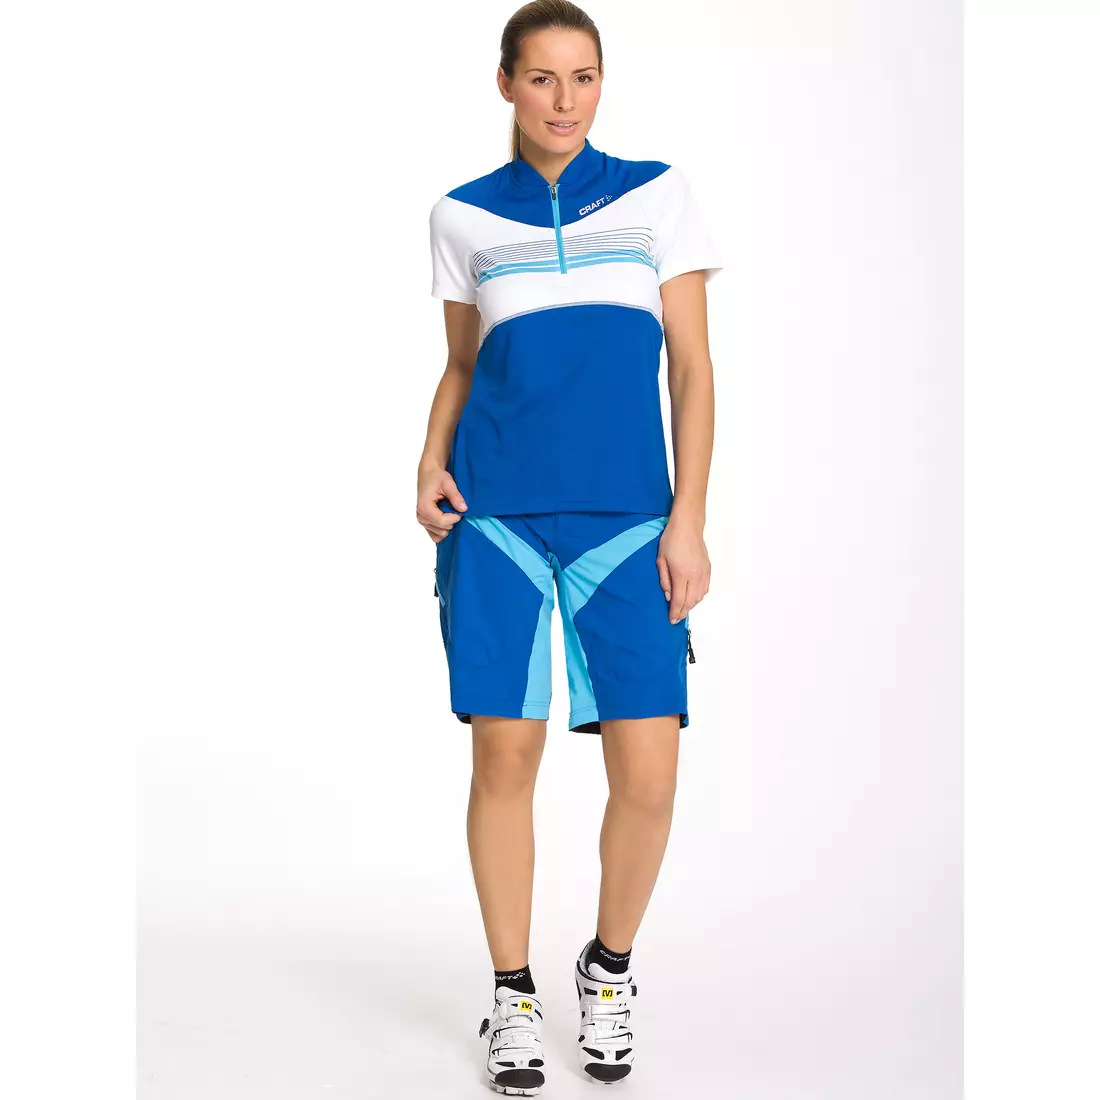 CRAFT ACTIVE BIKE - dámský cyklistický dres 1901942-2345, barva: bílá a modrá